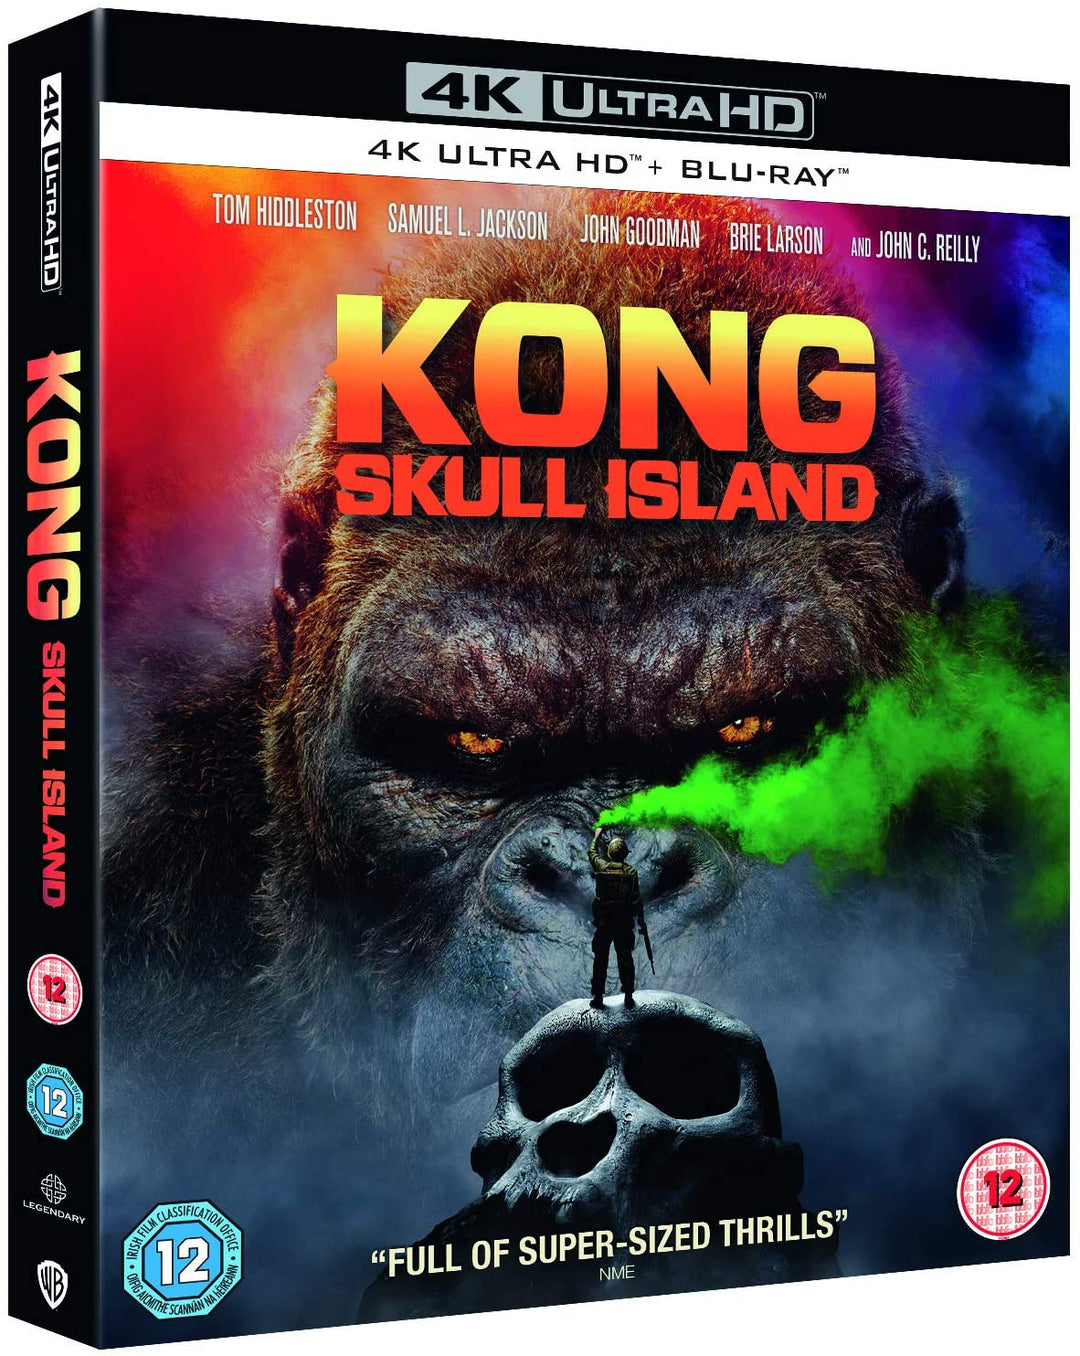 Kong: Skull Island - Adventure/Action [Blu-ray]